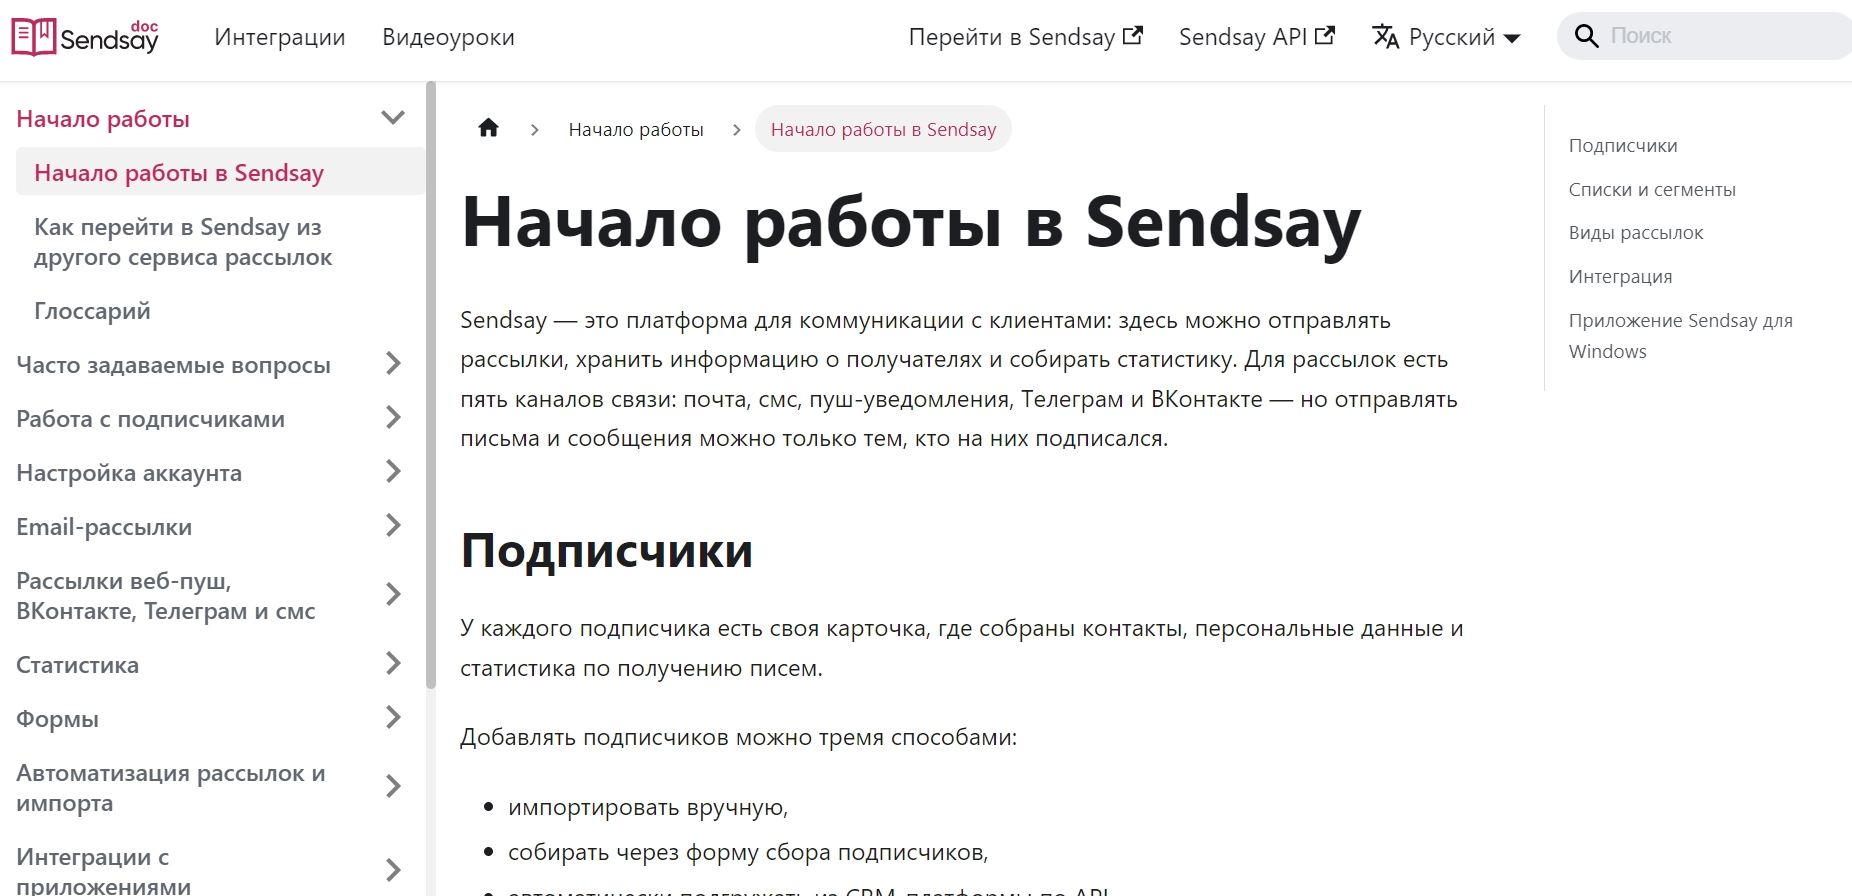 Интерфейс базы знаний Sendsay